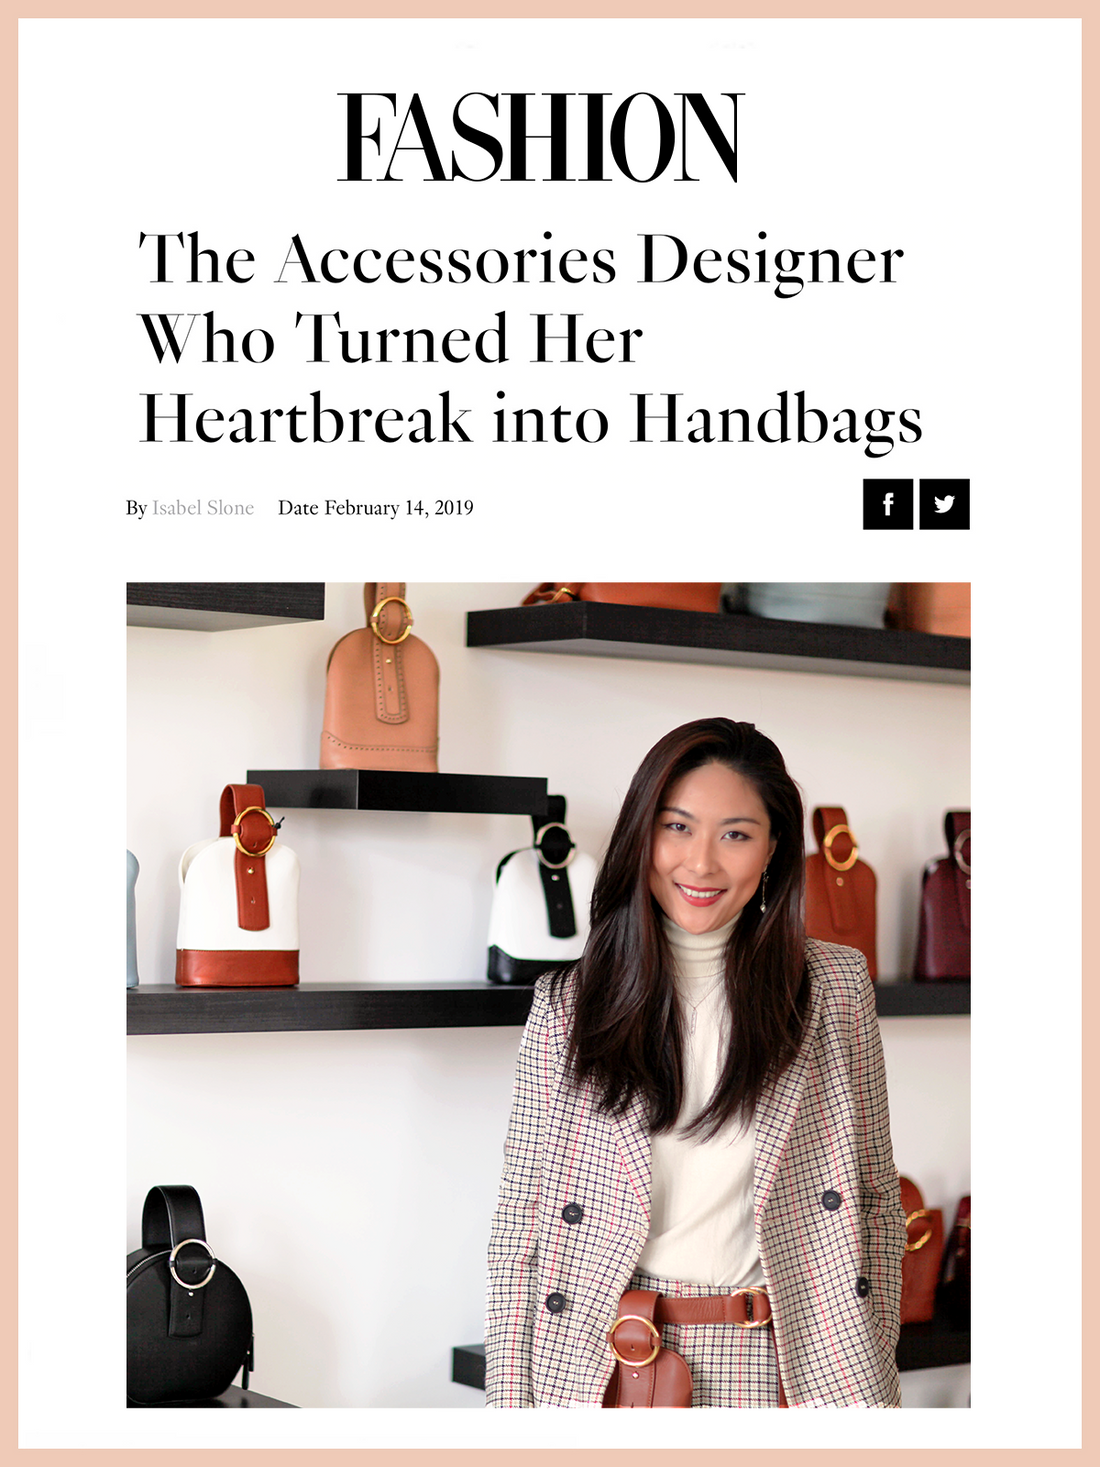 FASHION, The Accessories Designer Who Turned Her Heartbreak into Handbags